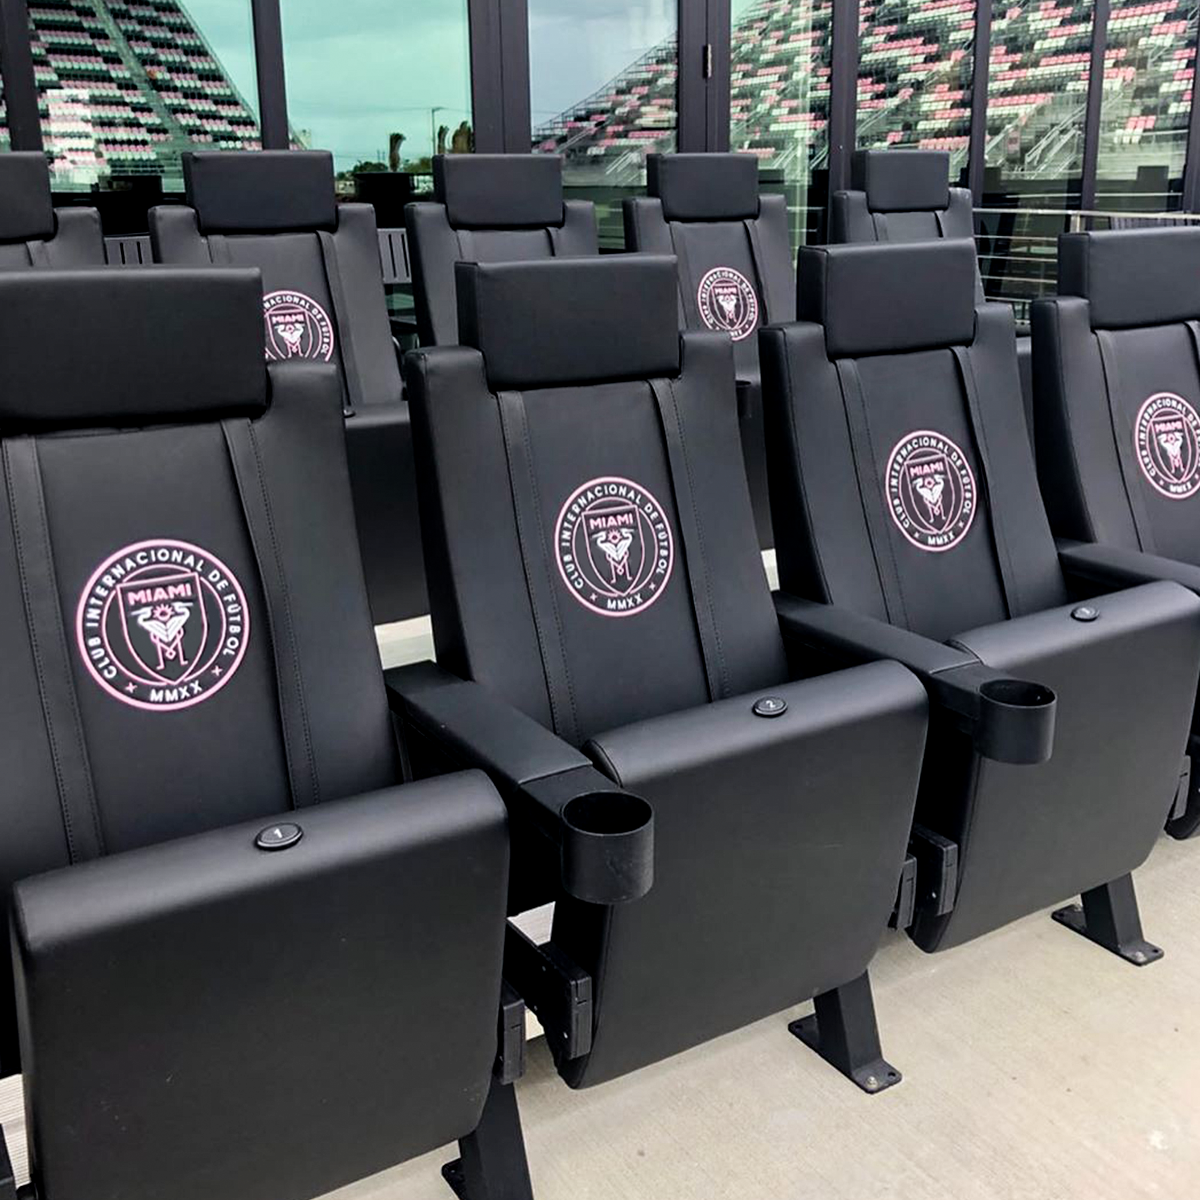 SuiteMax 3.5 VIP Seats with Northern Arizona University Primary Logo